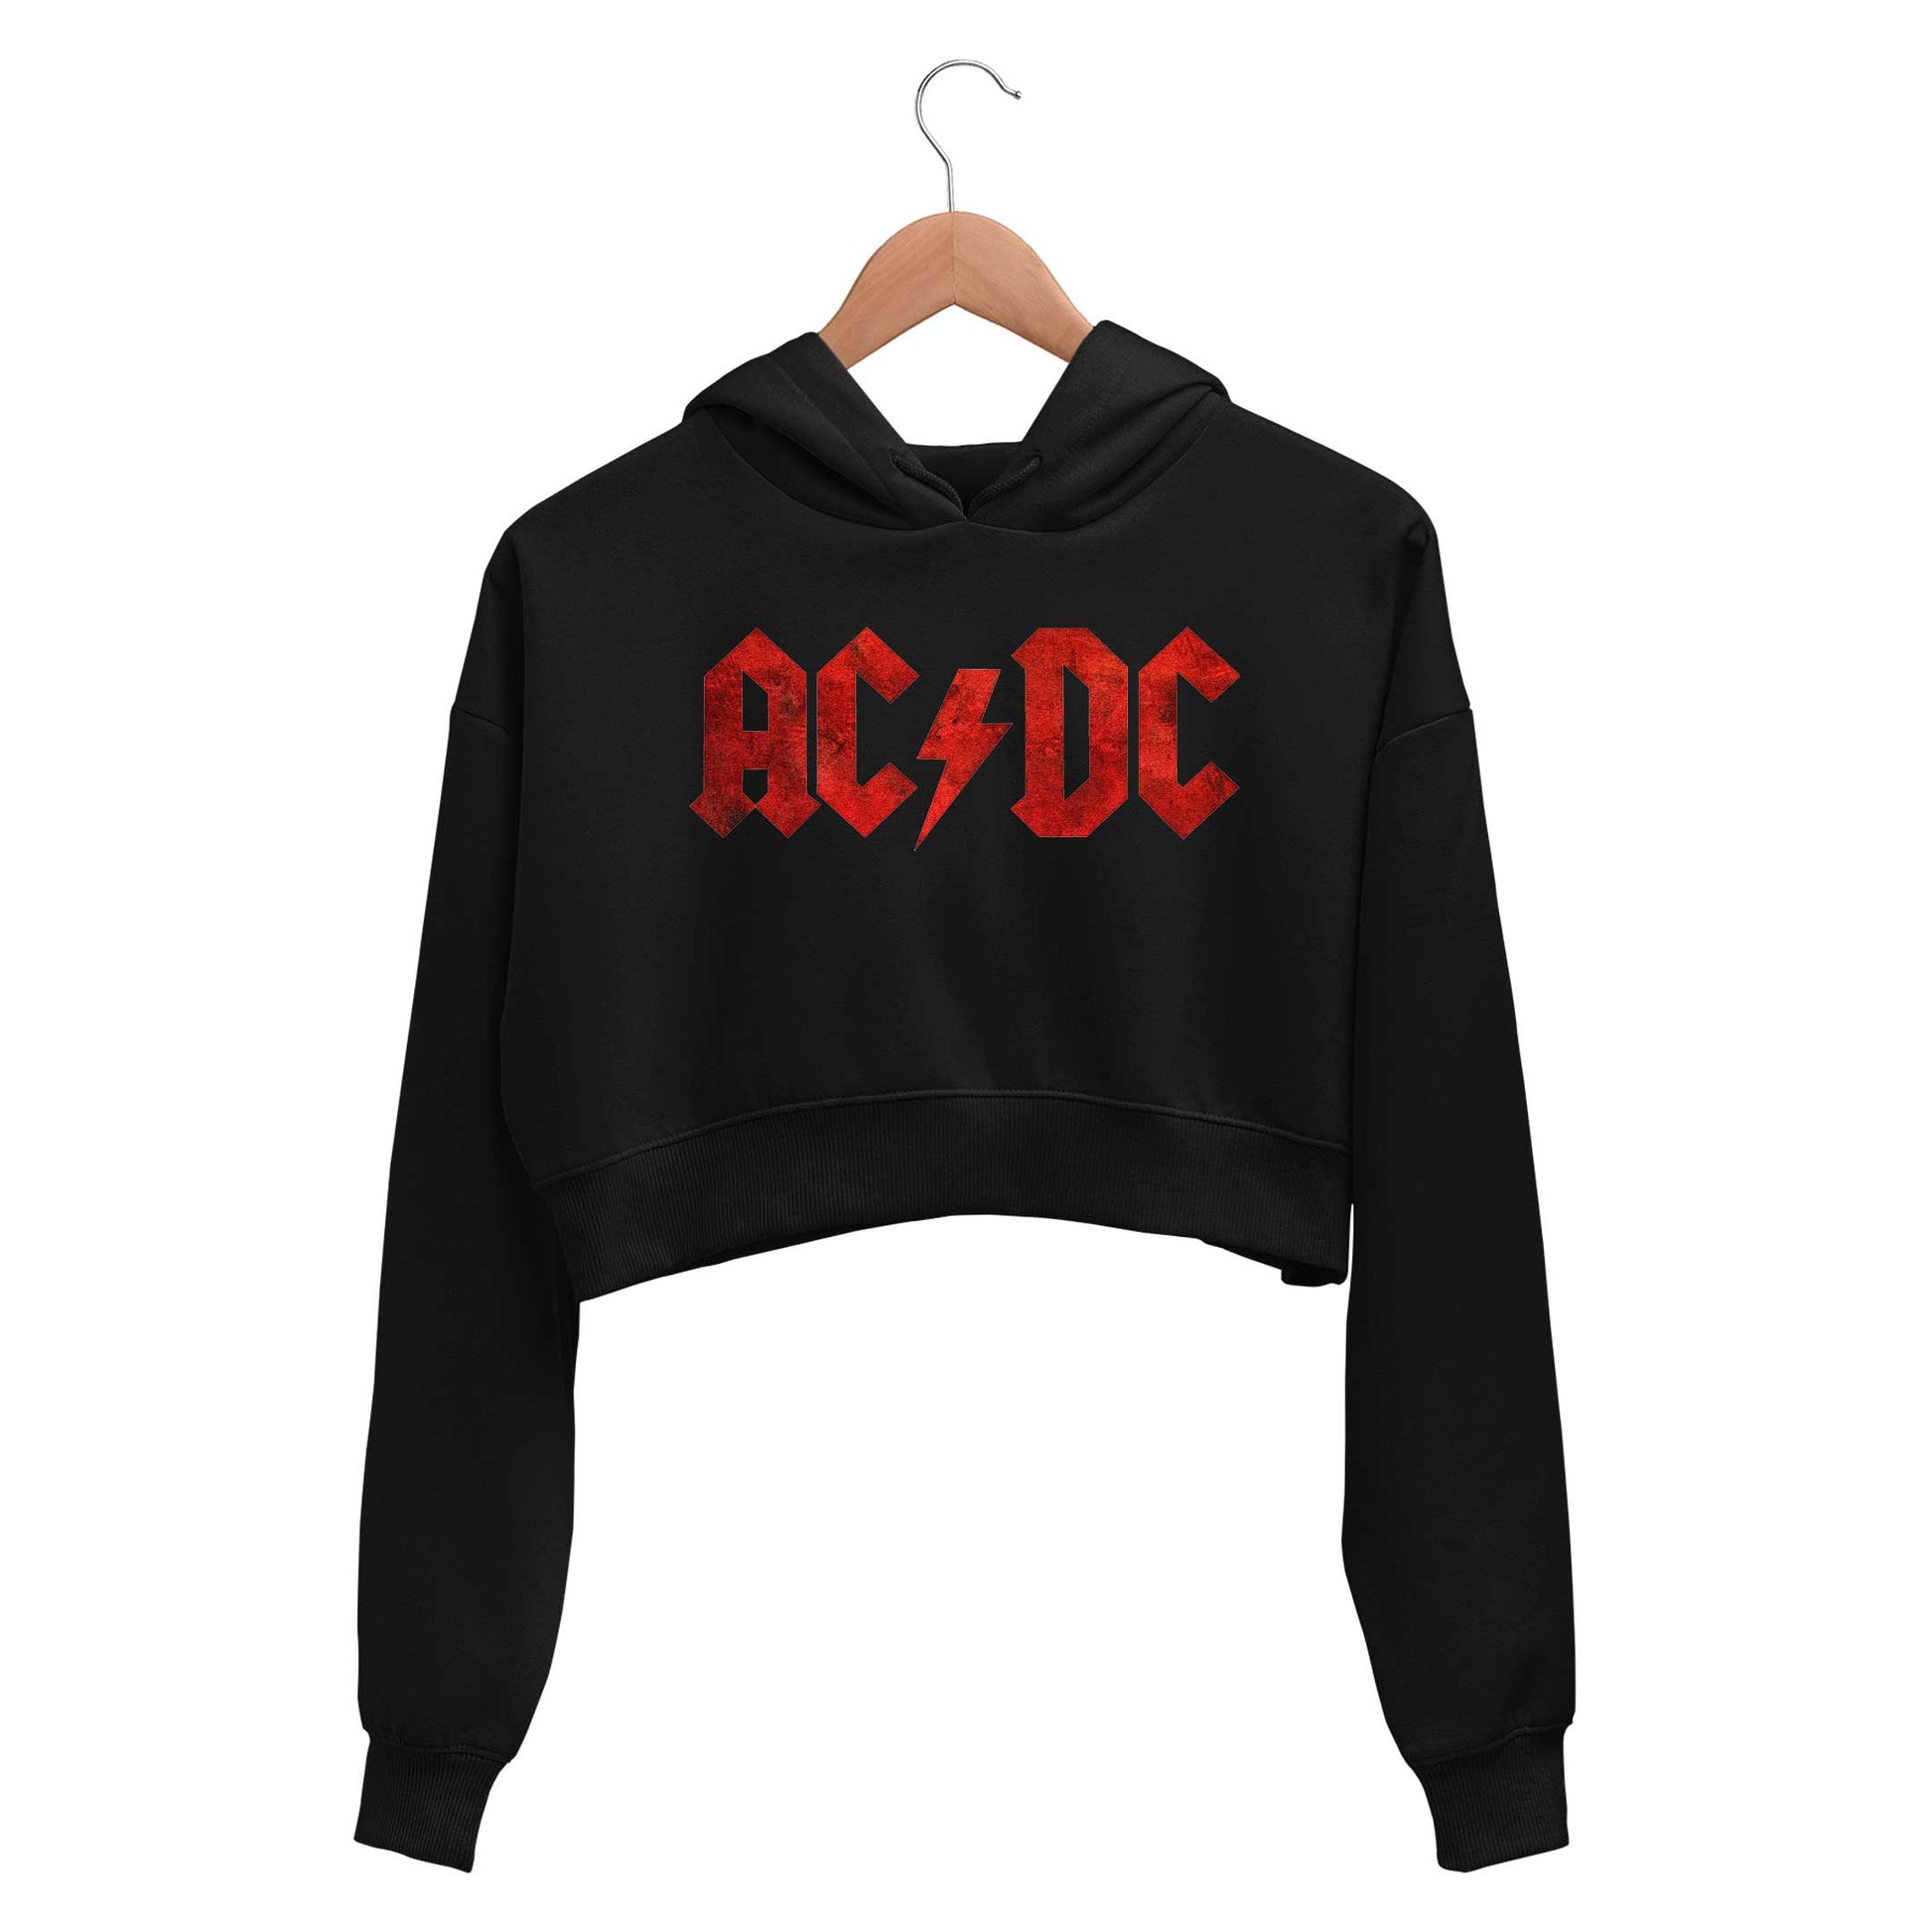 ac/dc rock crop hoodie hooded sweatshirt upper winterwear music band buy online india the banyan tee tbt men women girls boys unisex black